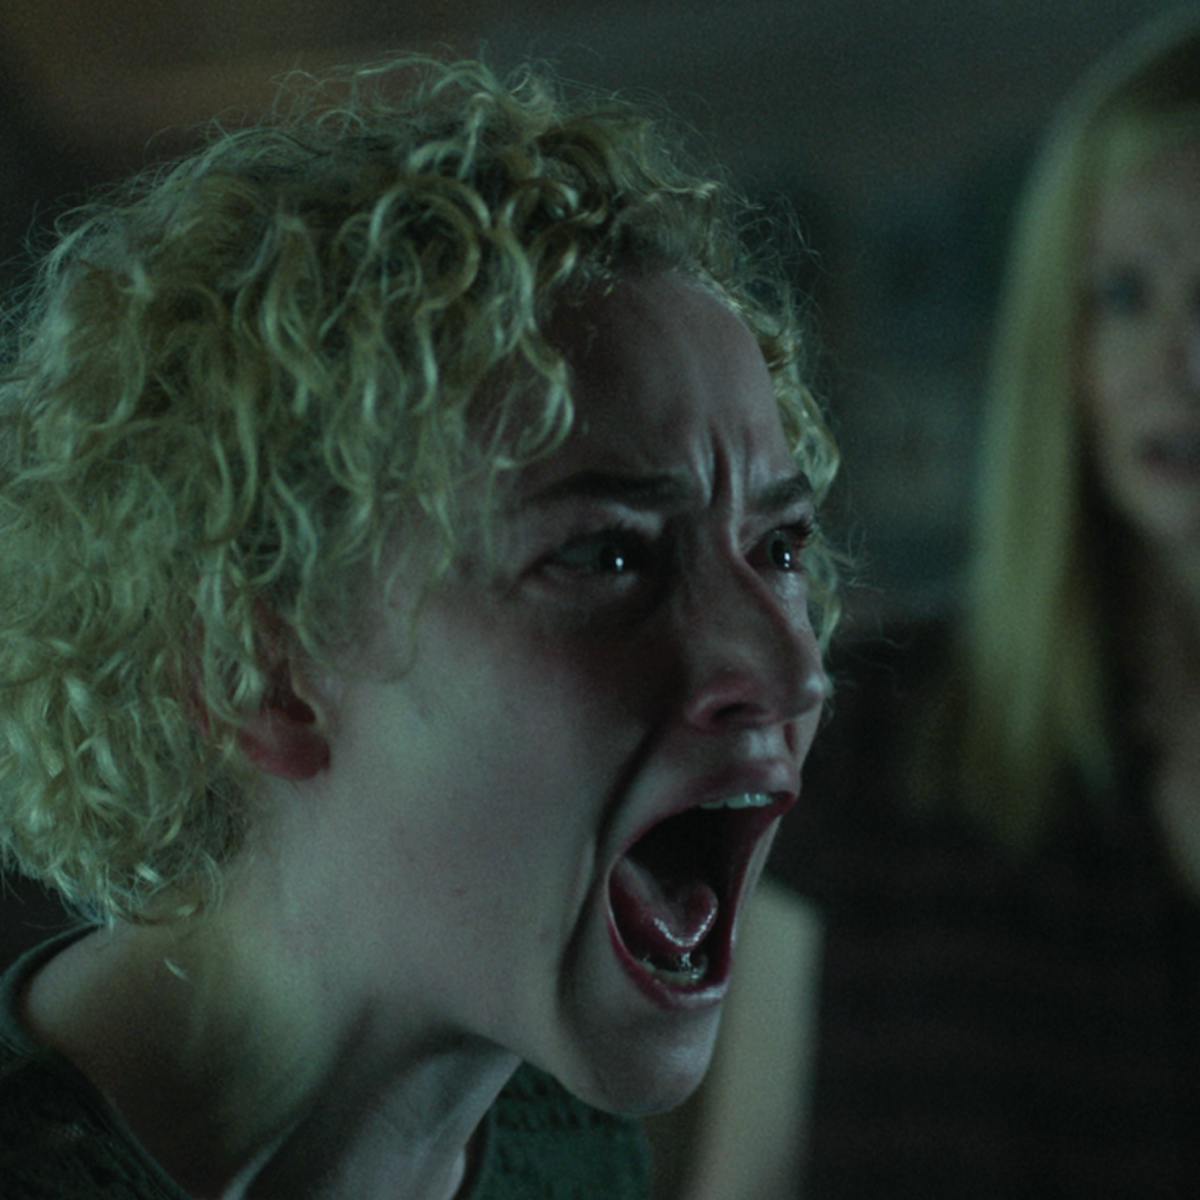 Ruth Langmore (Julia Garner) screams at someone off camera, while Wendy Bryde (Laura Linney) looks on in shock. Garner's blond curls frame her beet red face.